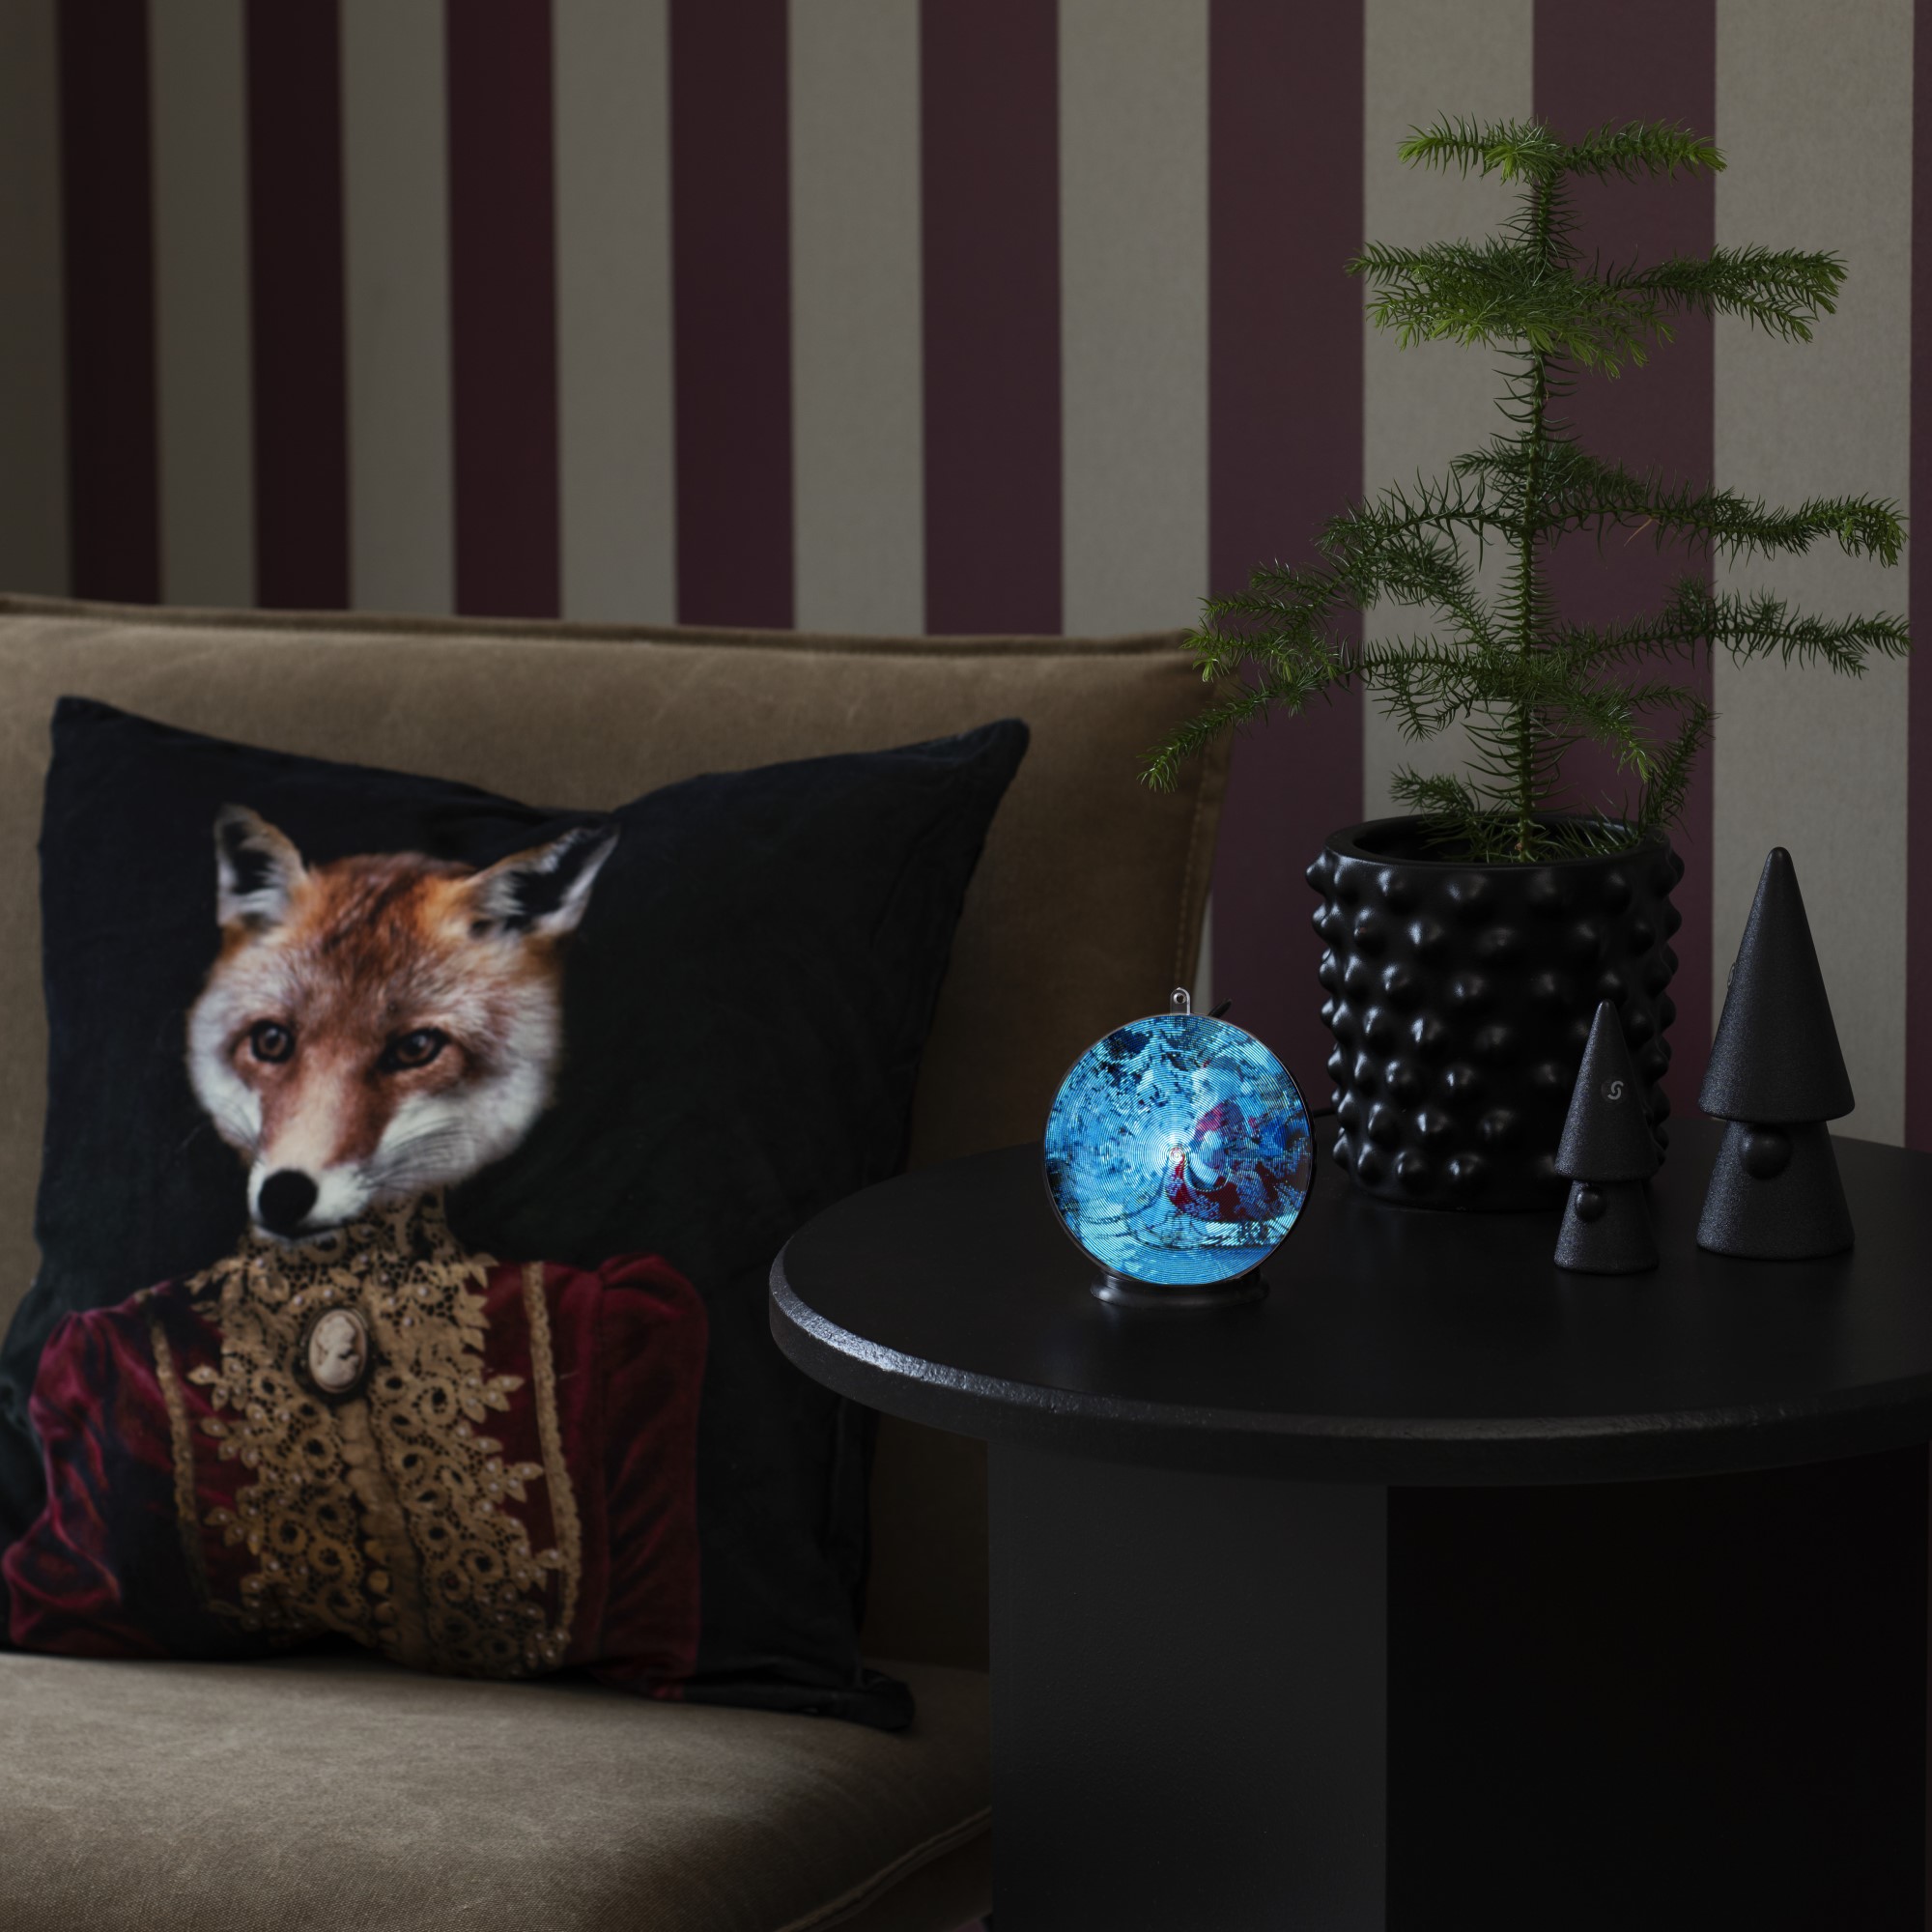 Konstsmide 3D LED Hologram Globe, Father Christmas with Sleigh, 42 LEDs, 2h Timer, 10cm